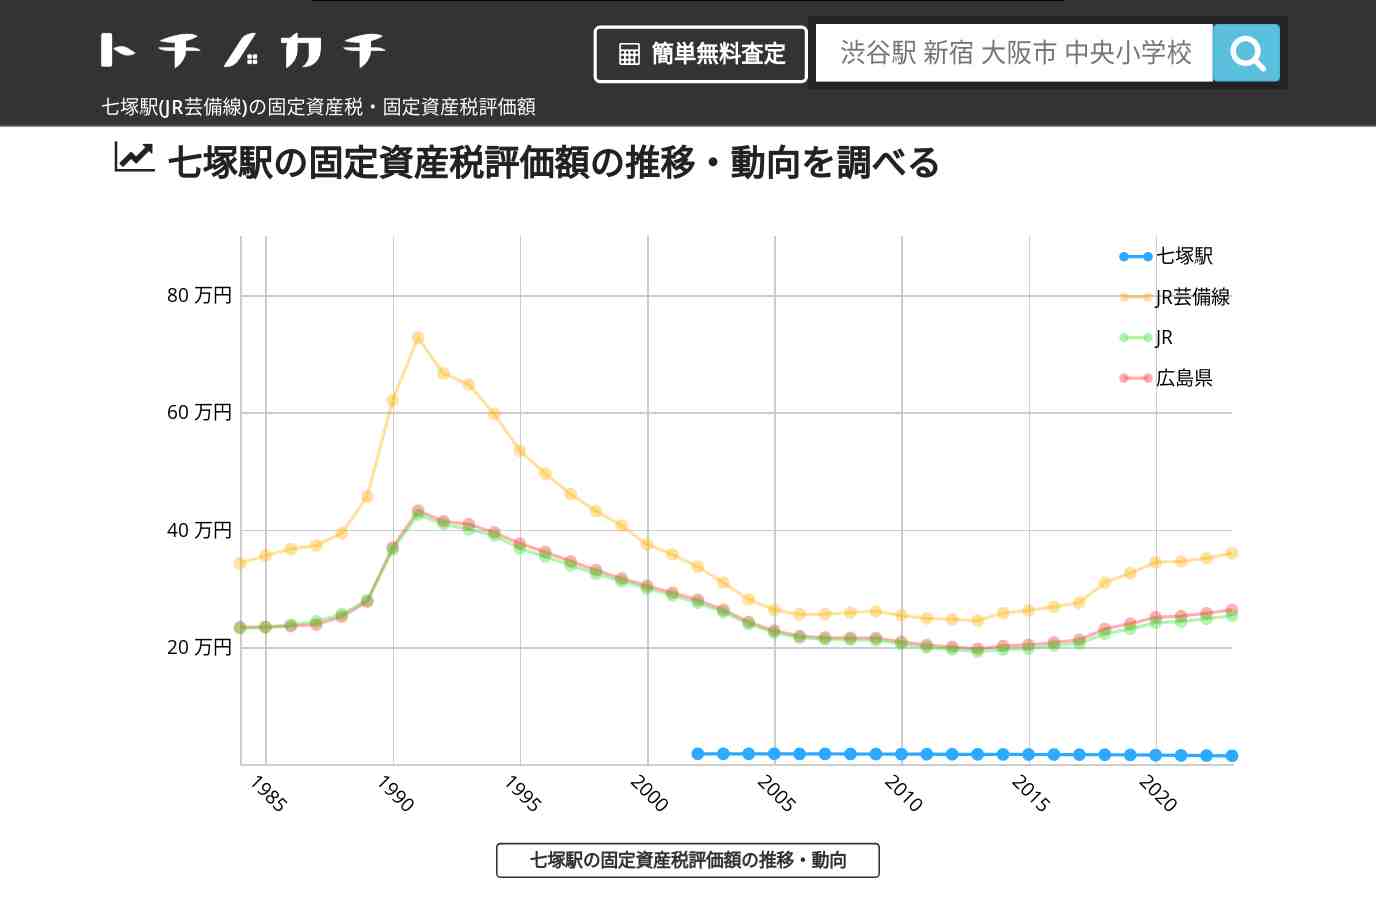 七塚駅(JR芸備線)の固定資産税・固定資産税評価額 | トチノカチ